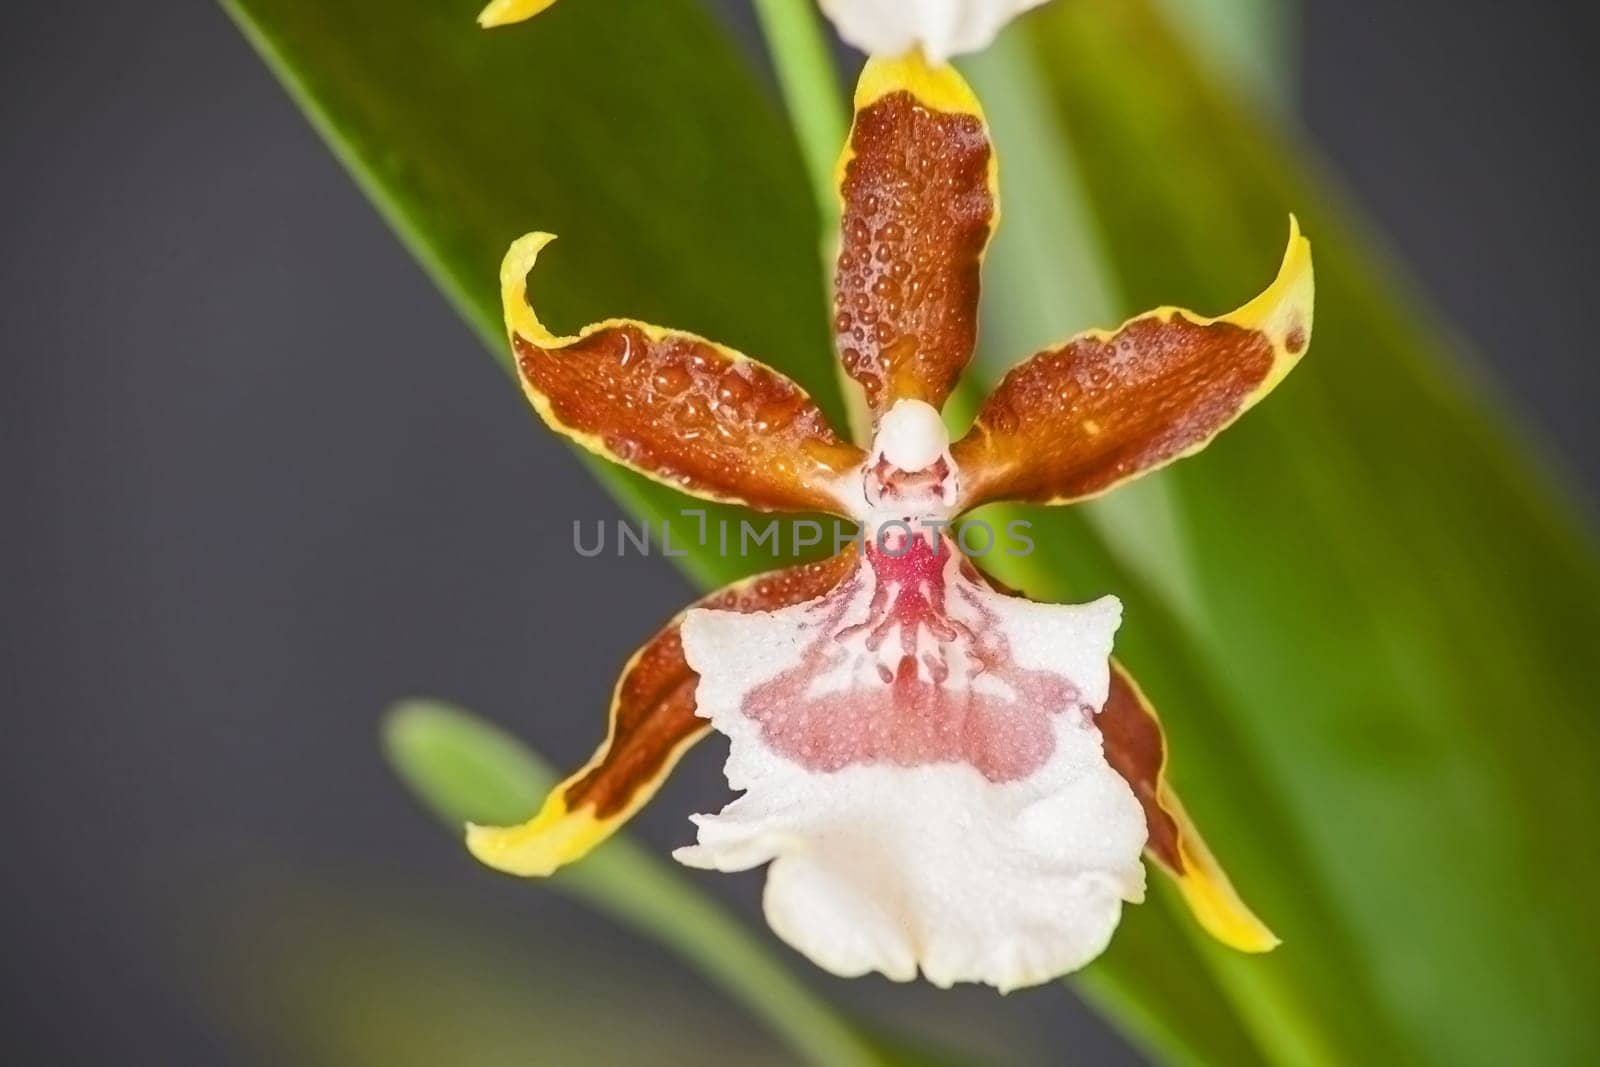 Dancing Lady Onicidium Orchid 13024 by kobus_peche